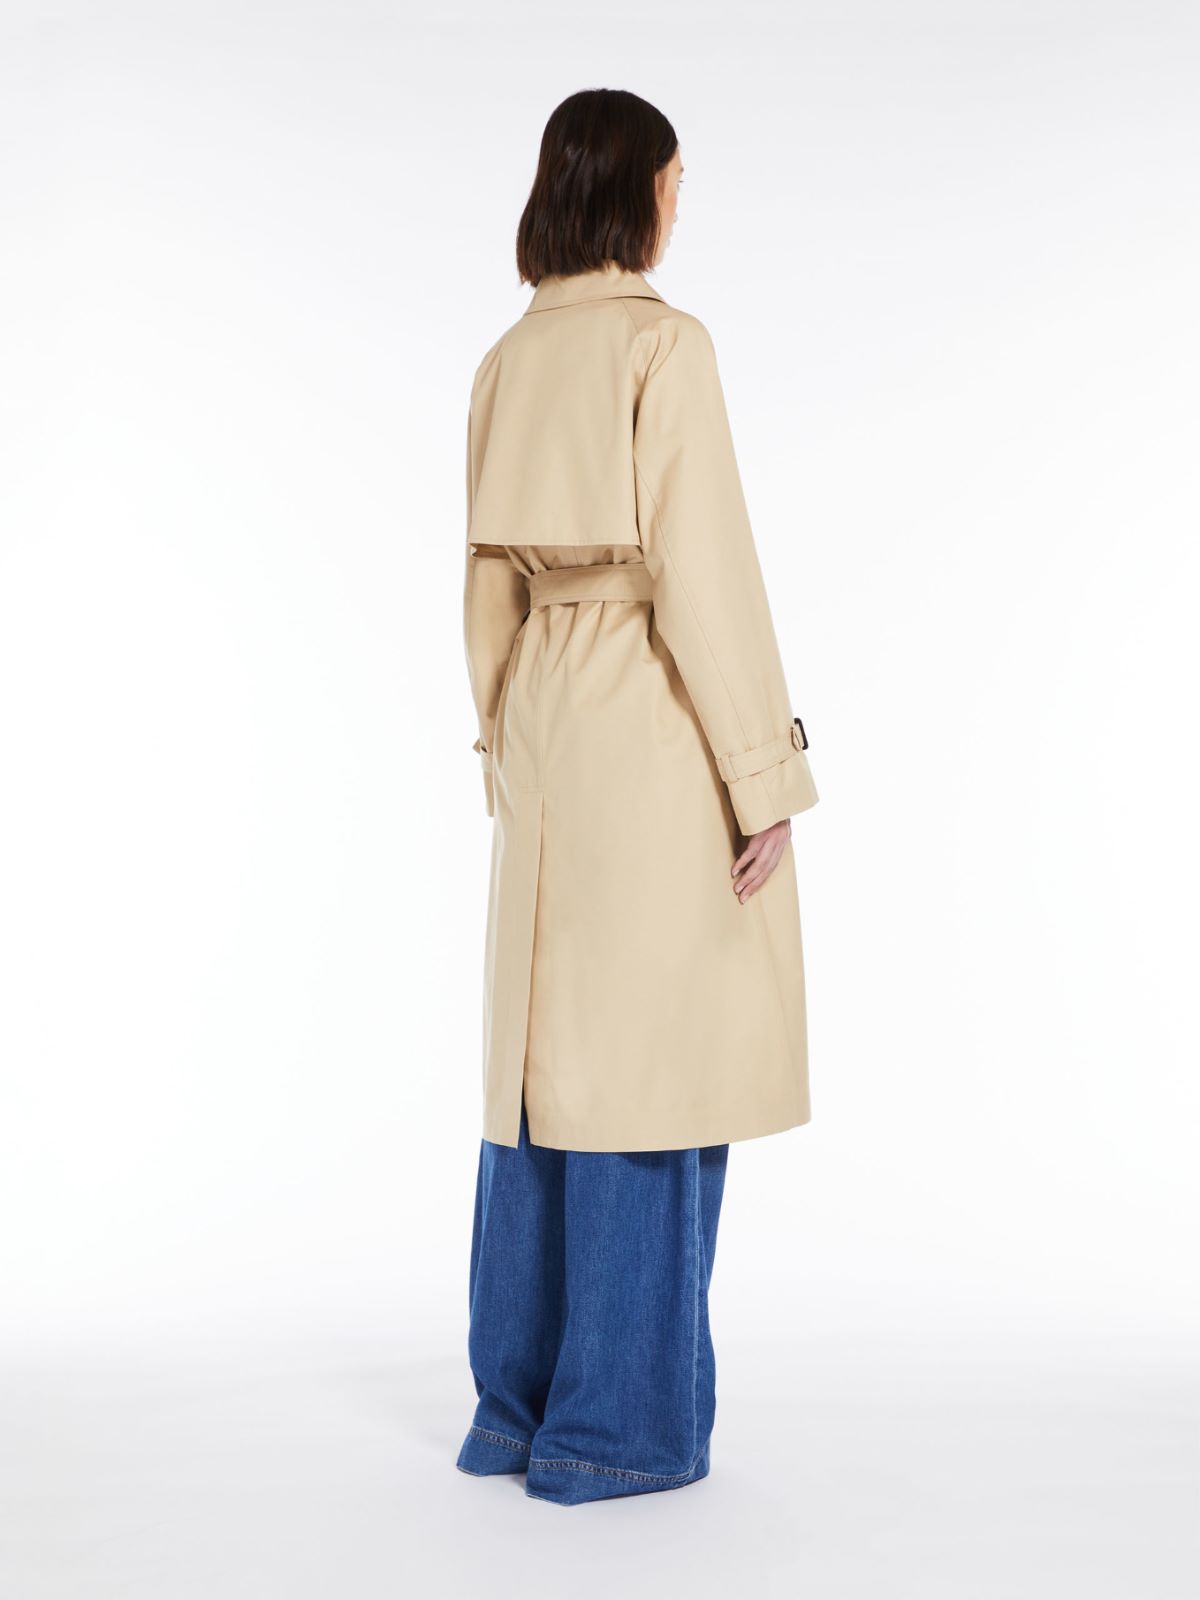 Reversible, water-resistant cotton trench coat, honey | Weekend Max Mara